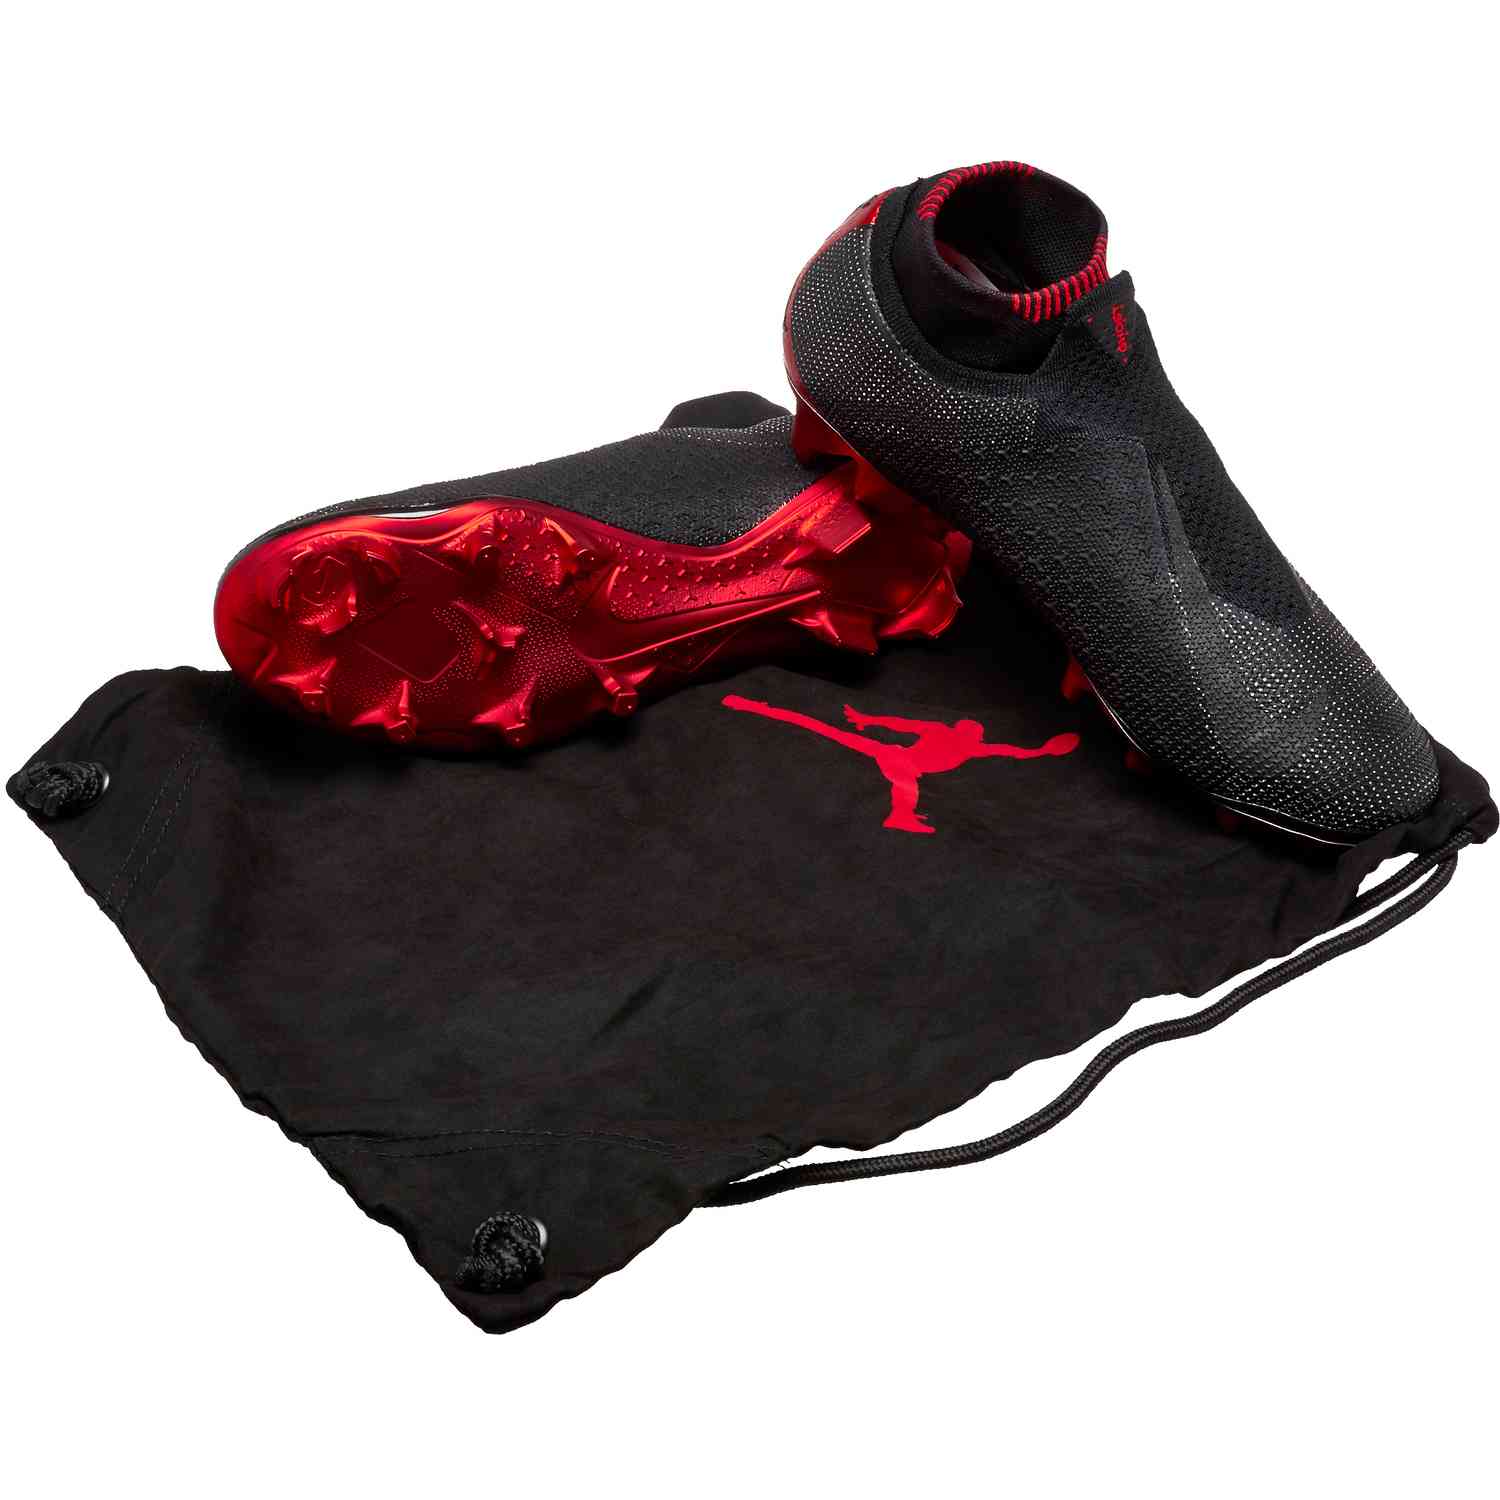 Nike x Jordan Phantom Vision Elite FG - Special Edition - Black Cat - Master